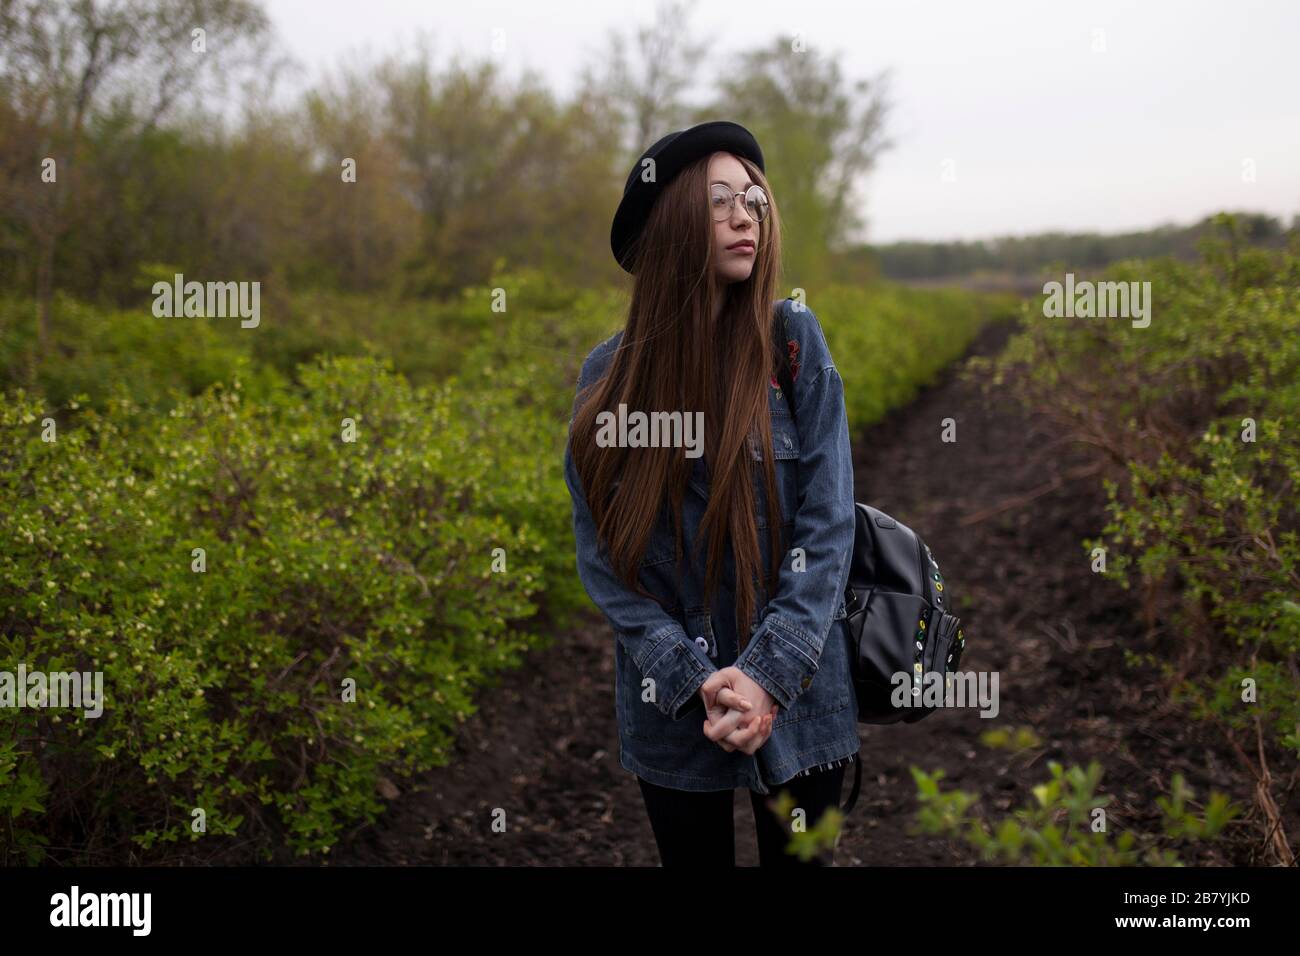 Junge Frau mit Jeansjacke im Feld stehend Stockfoto